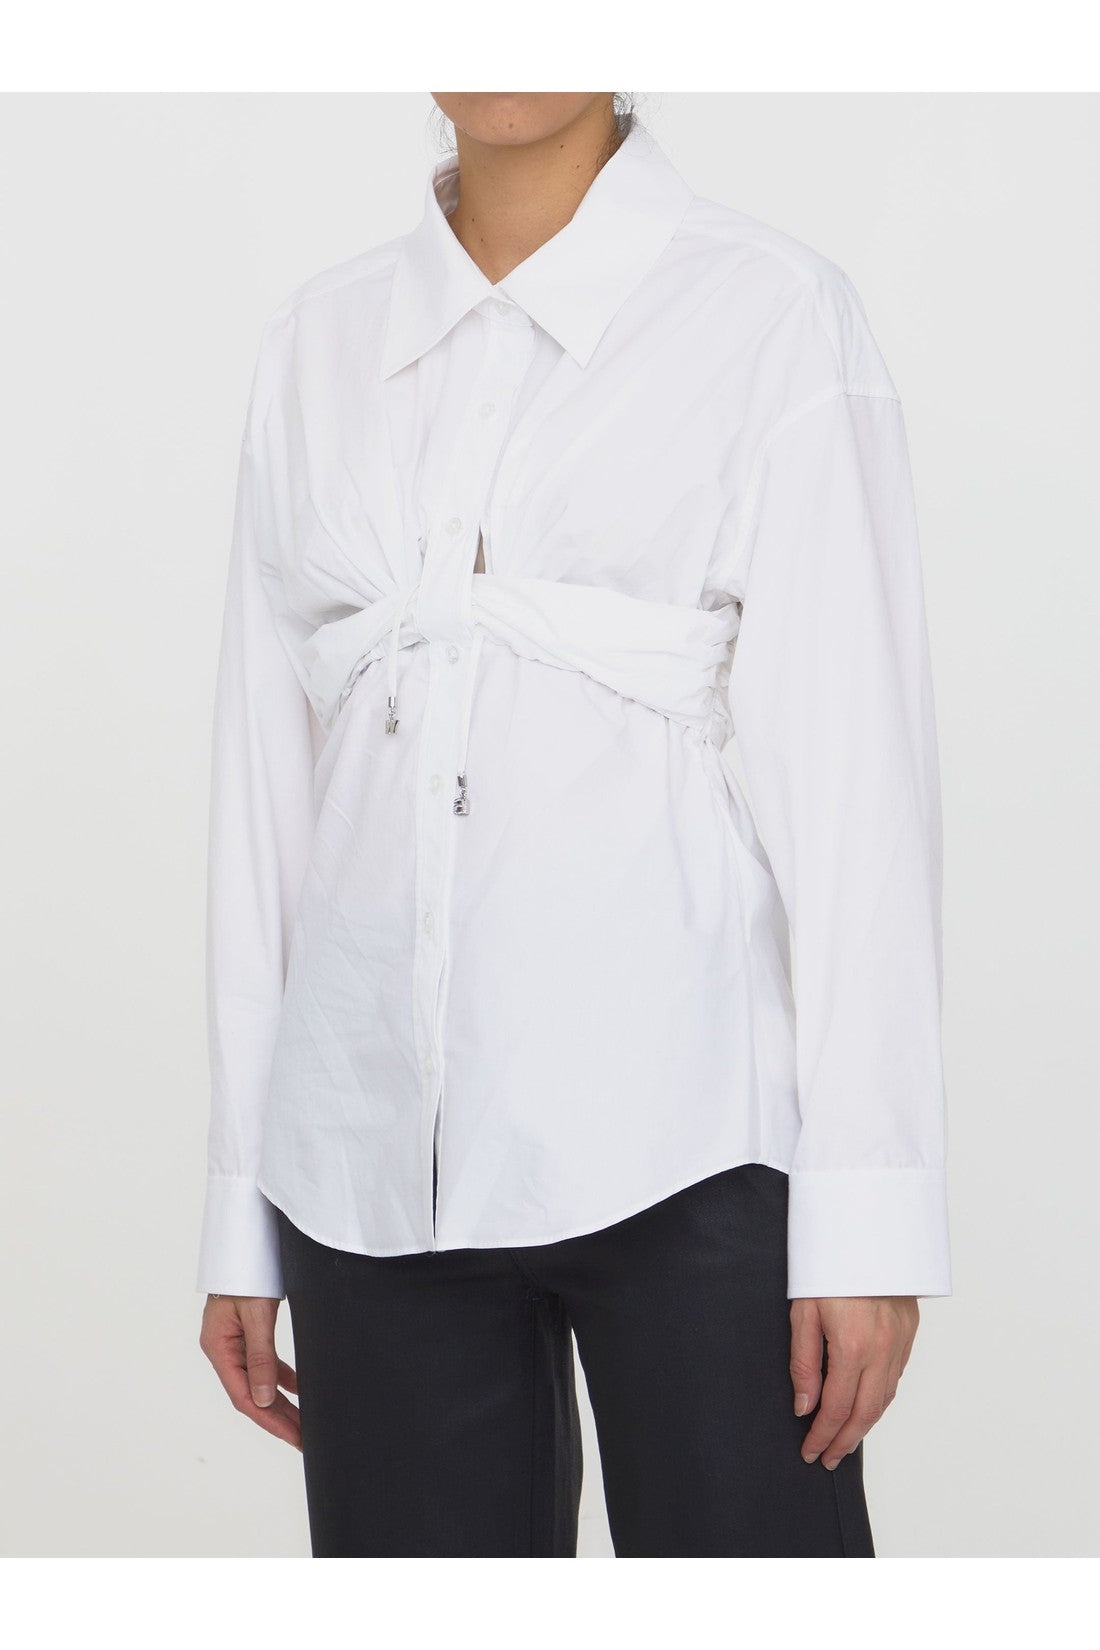 Ruched white shirt